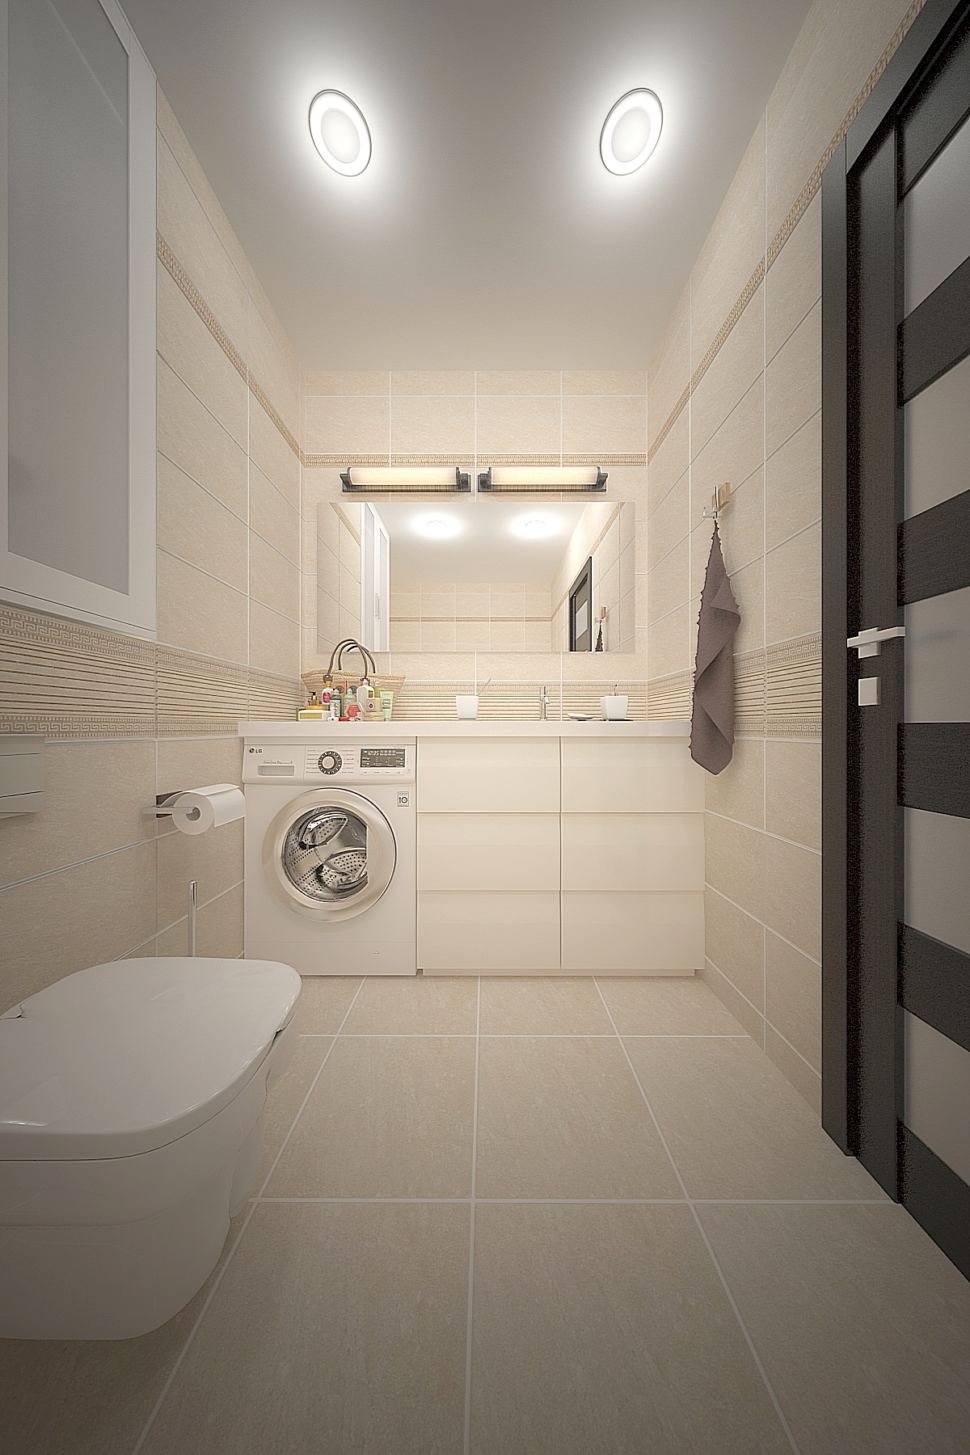 Проект ванной комнаты 3 кв.м в бежевых тонах, межкомнатная дверь, белый шкаф, стиральная машина, тумба, мойка, зеркало